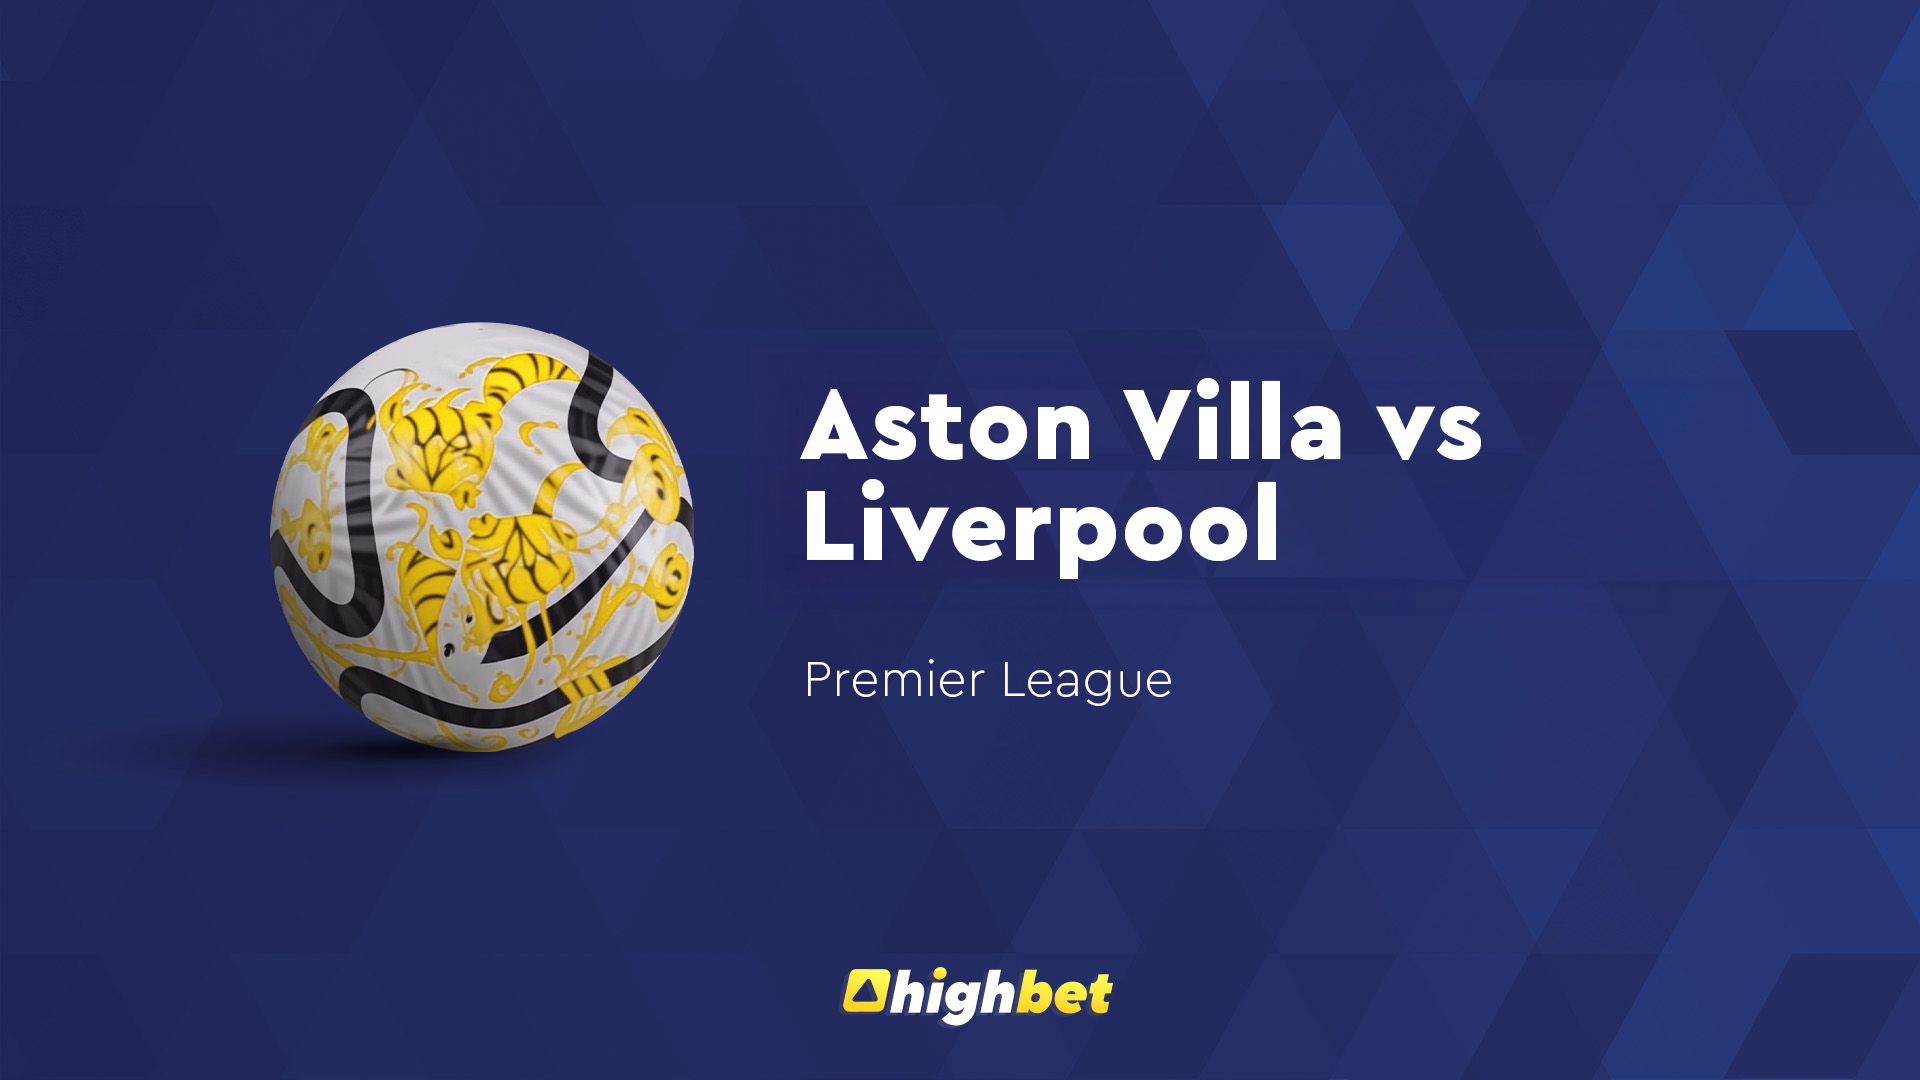 Aston Villa vs Liverpool - Highbet Preview - Premier League Prediction